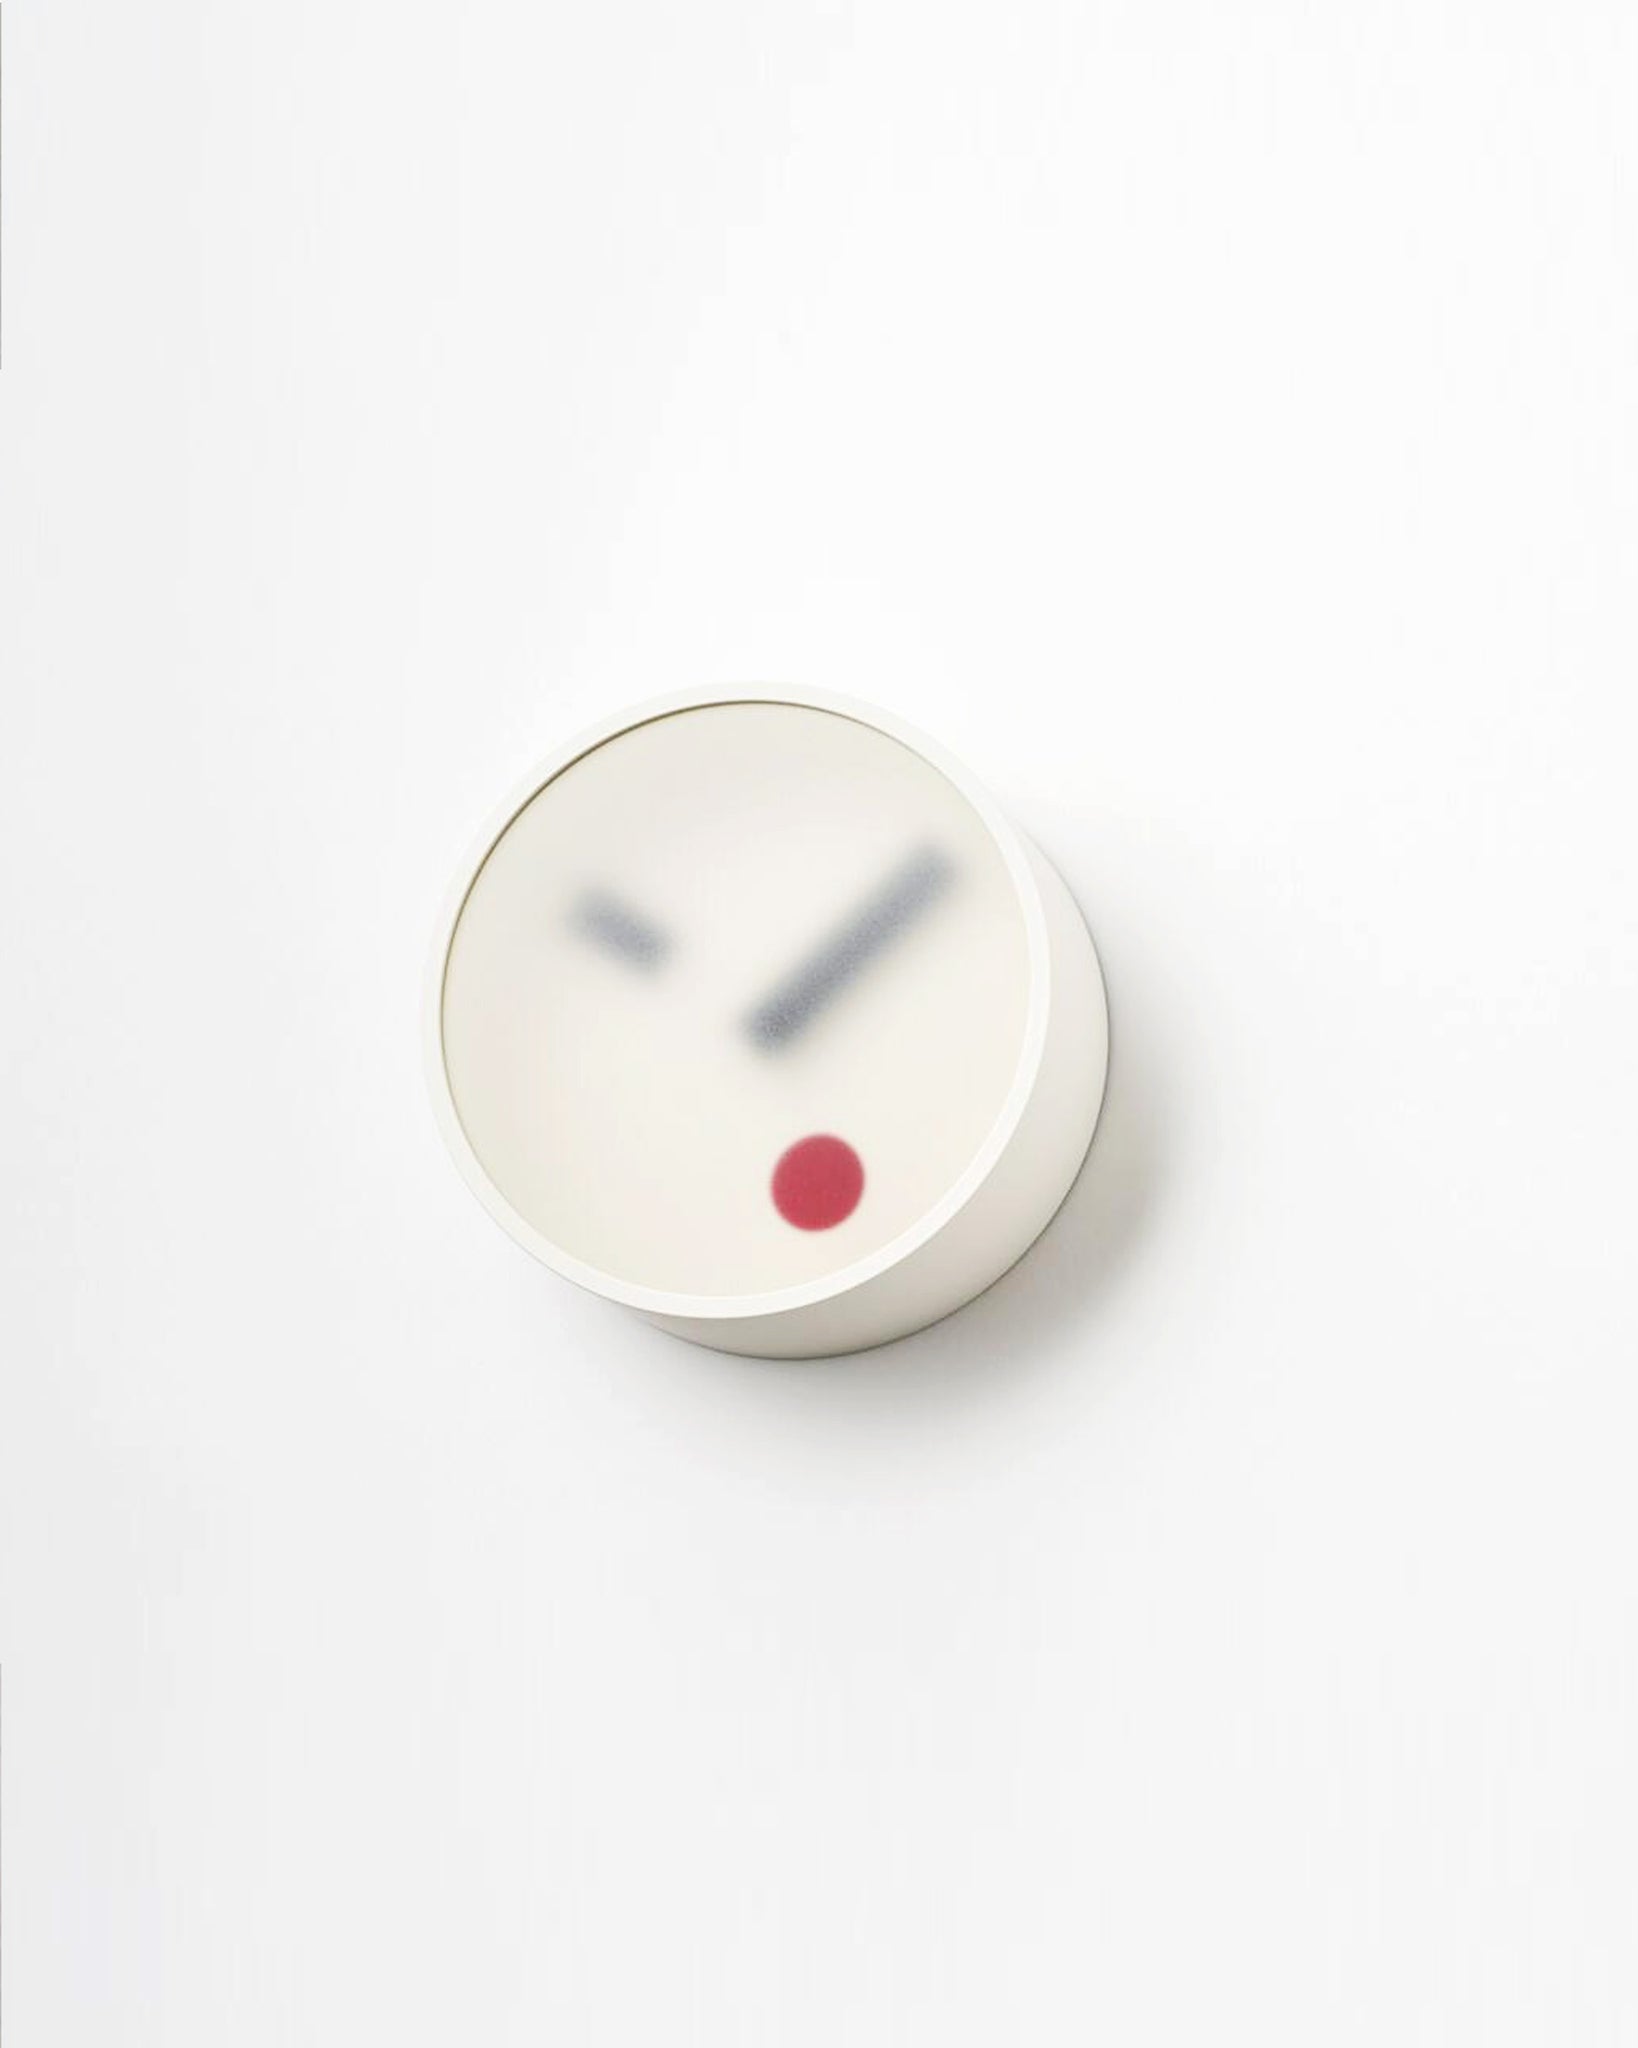 Angled side view of White Kehai Clock by Koizumi studio against white-gray background.